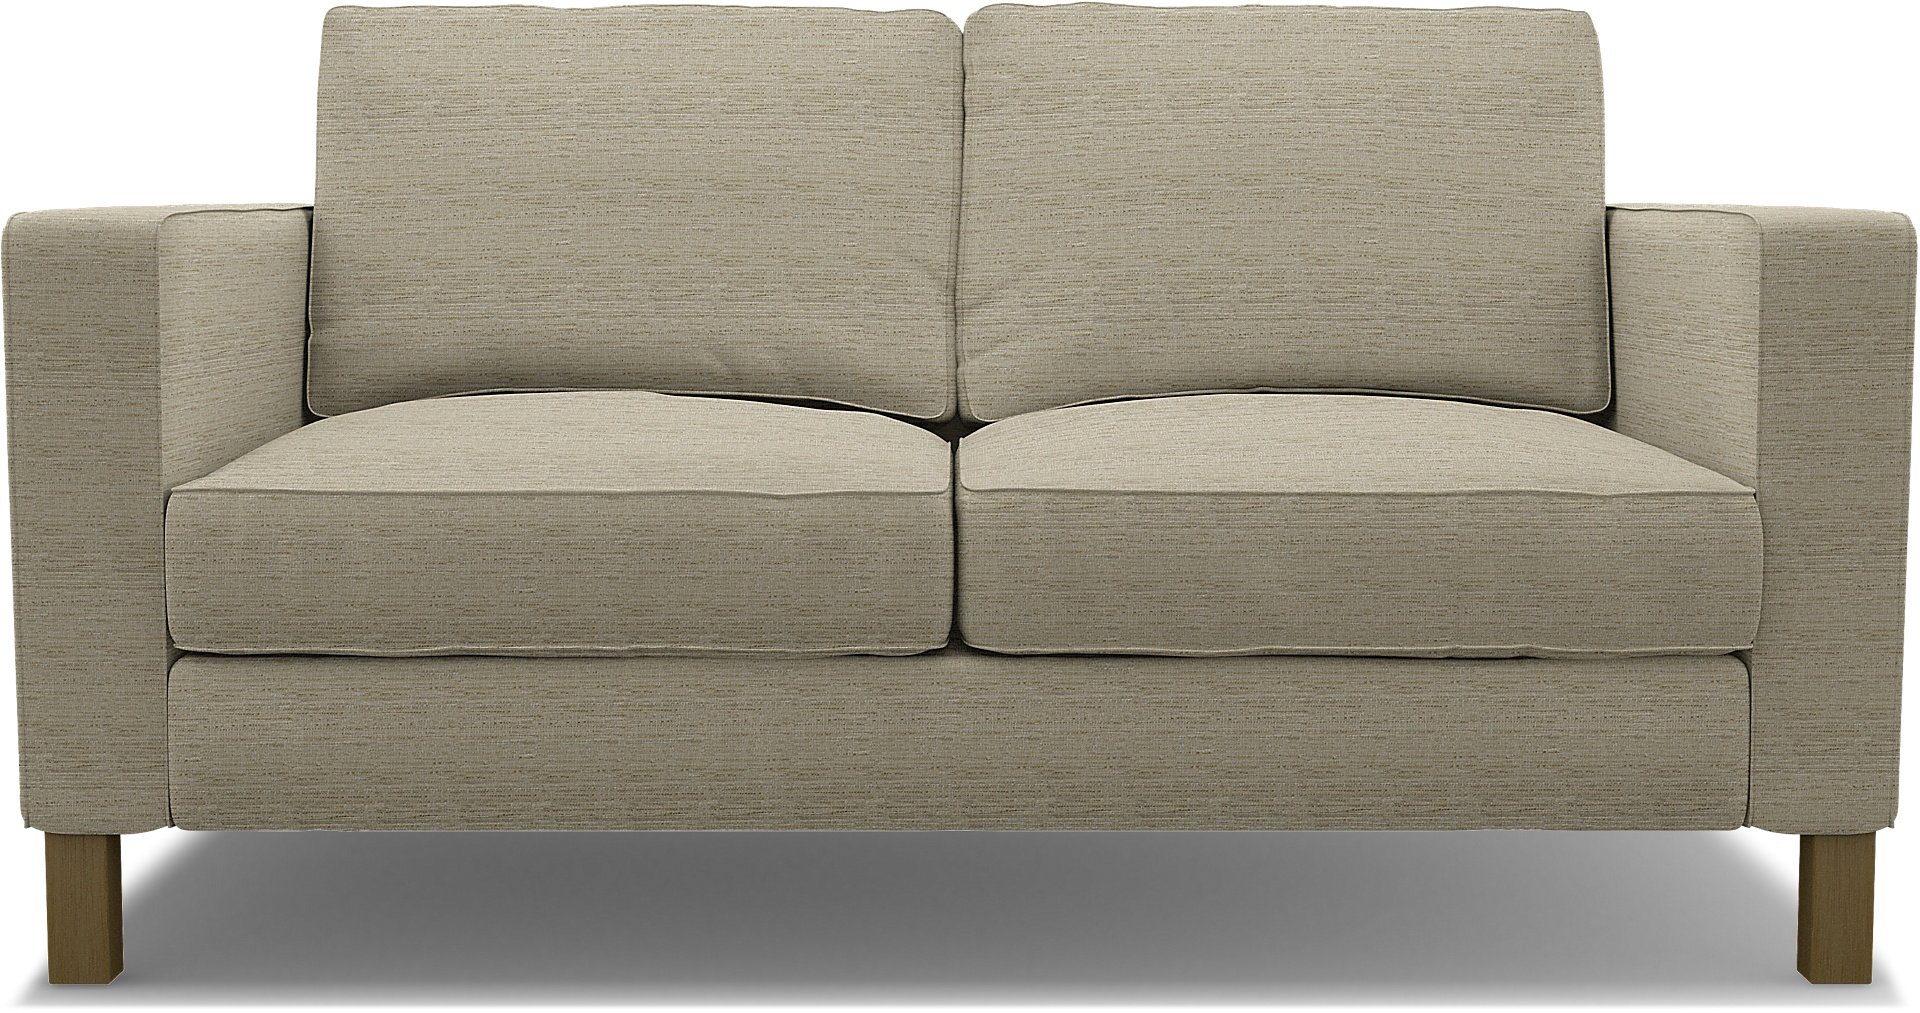 IKEA - Karlstad 2 Seater Sofa Cover, Light Sand, Boucle & Texture - Bemz